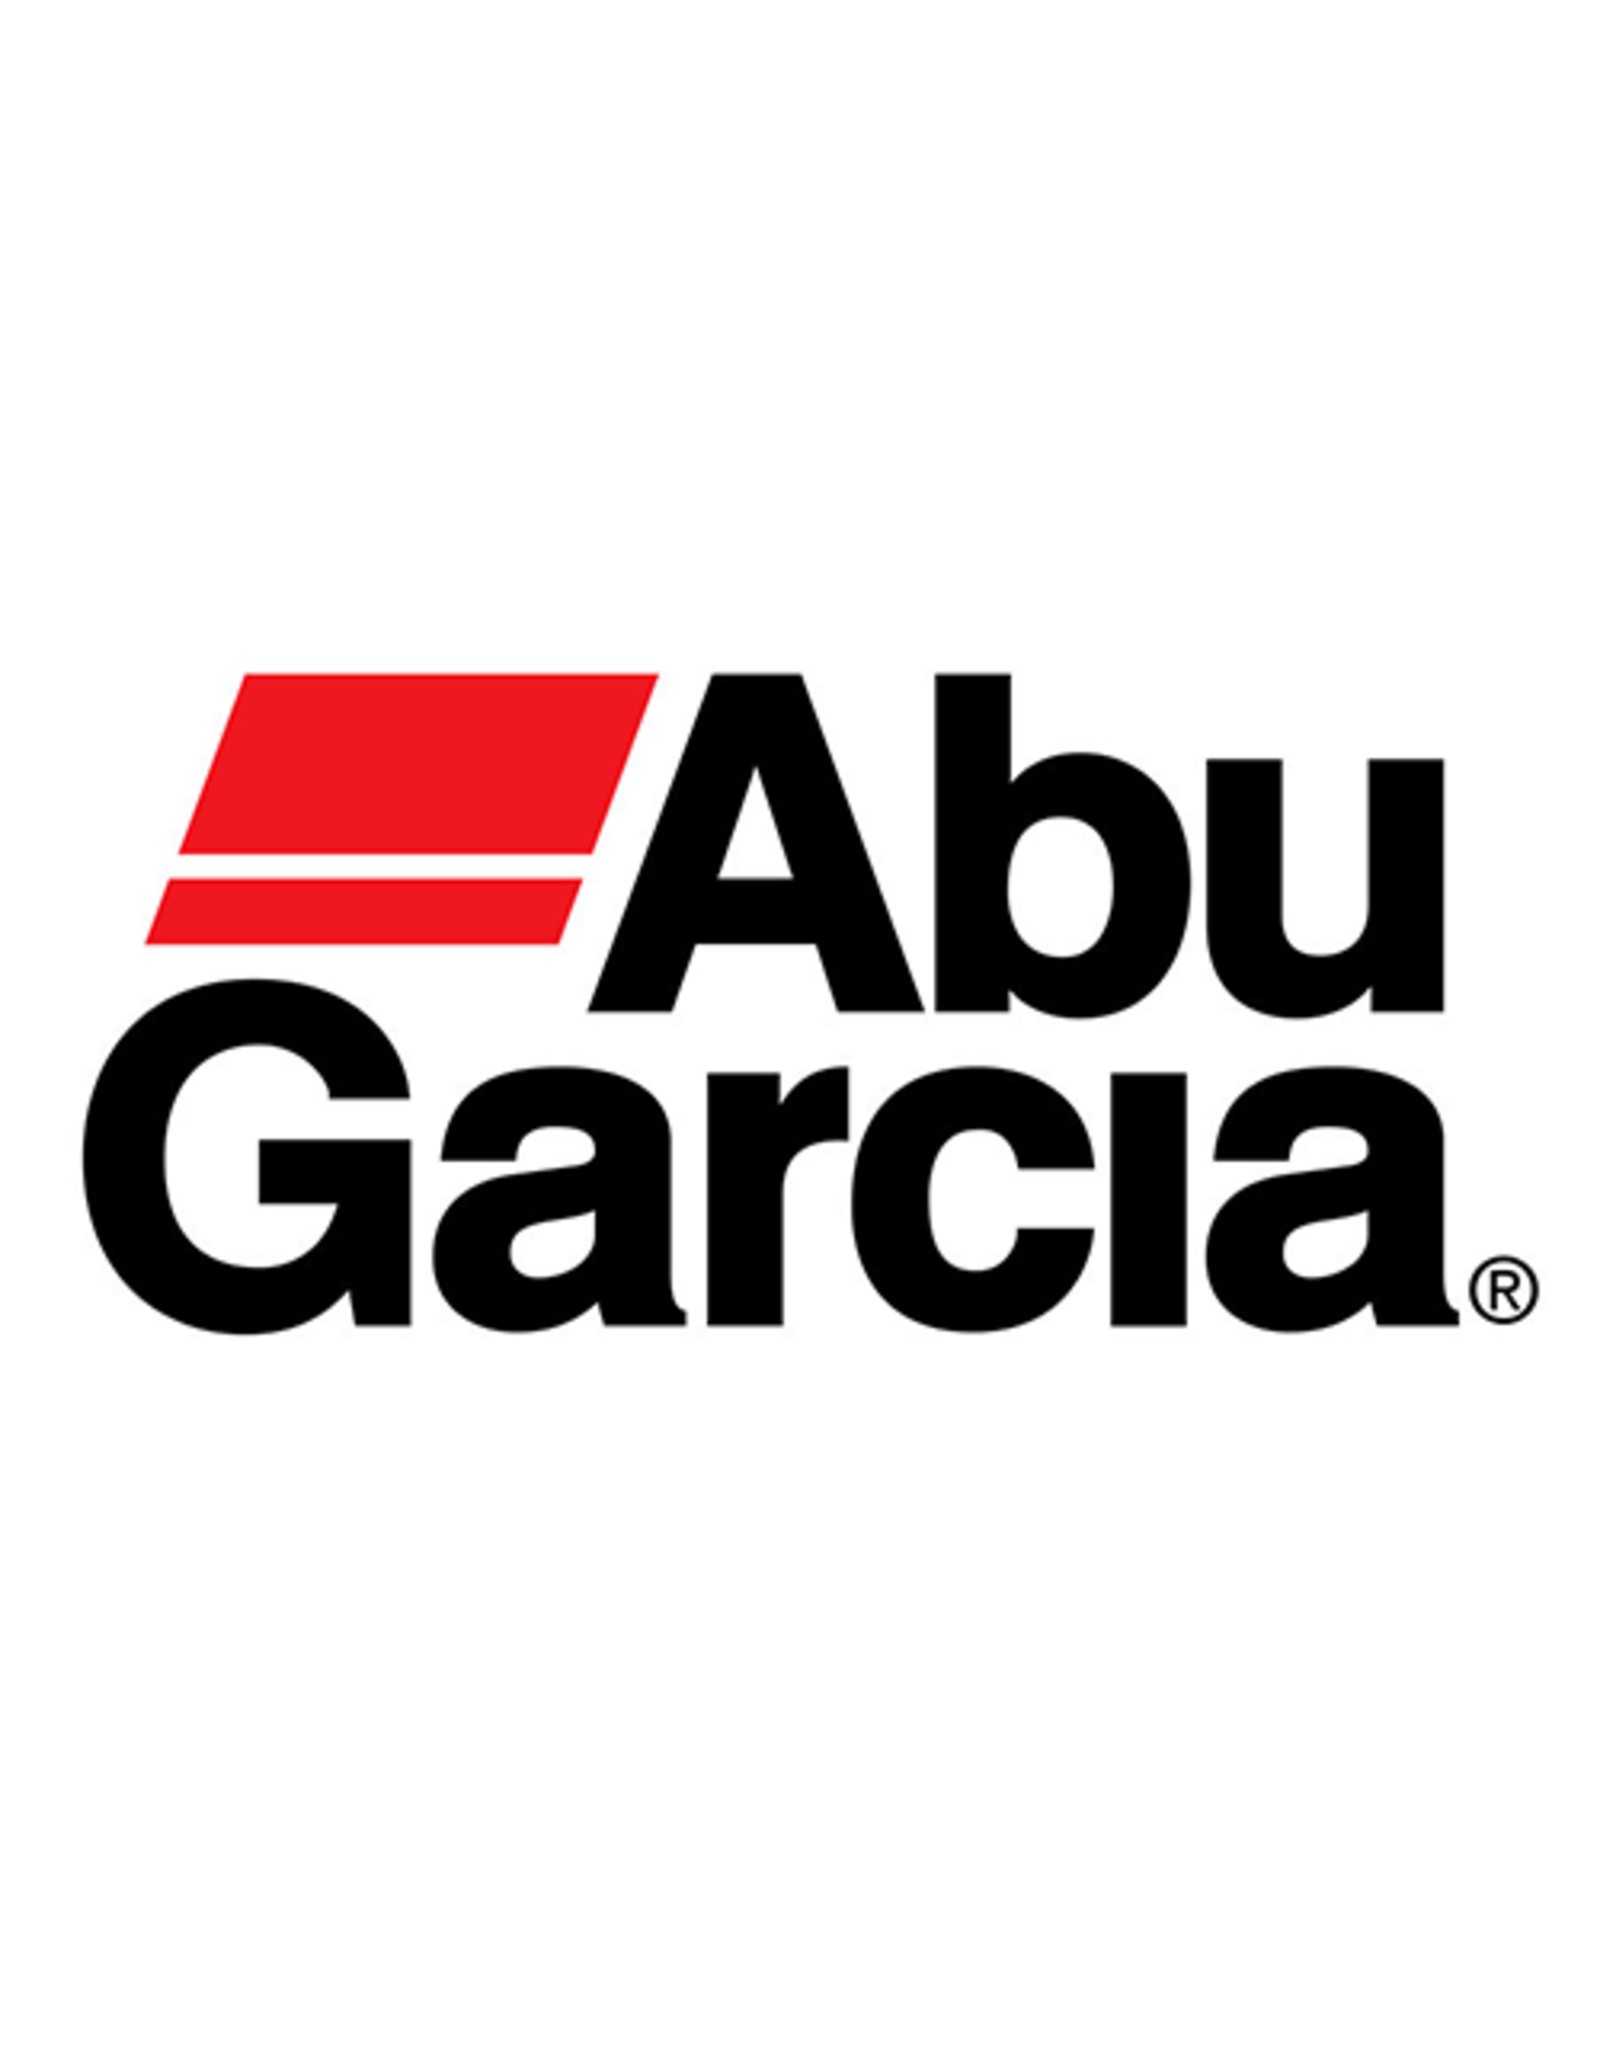 Abu Garcia 51222  BALL BEARING /NLA